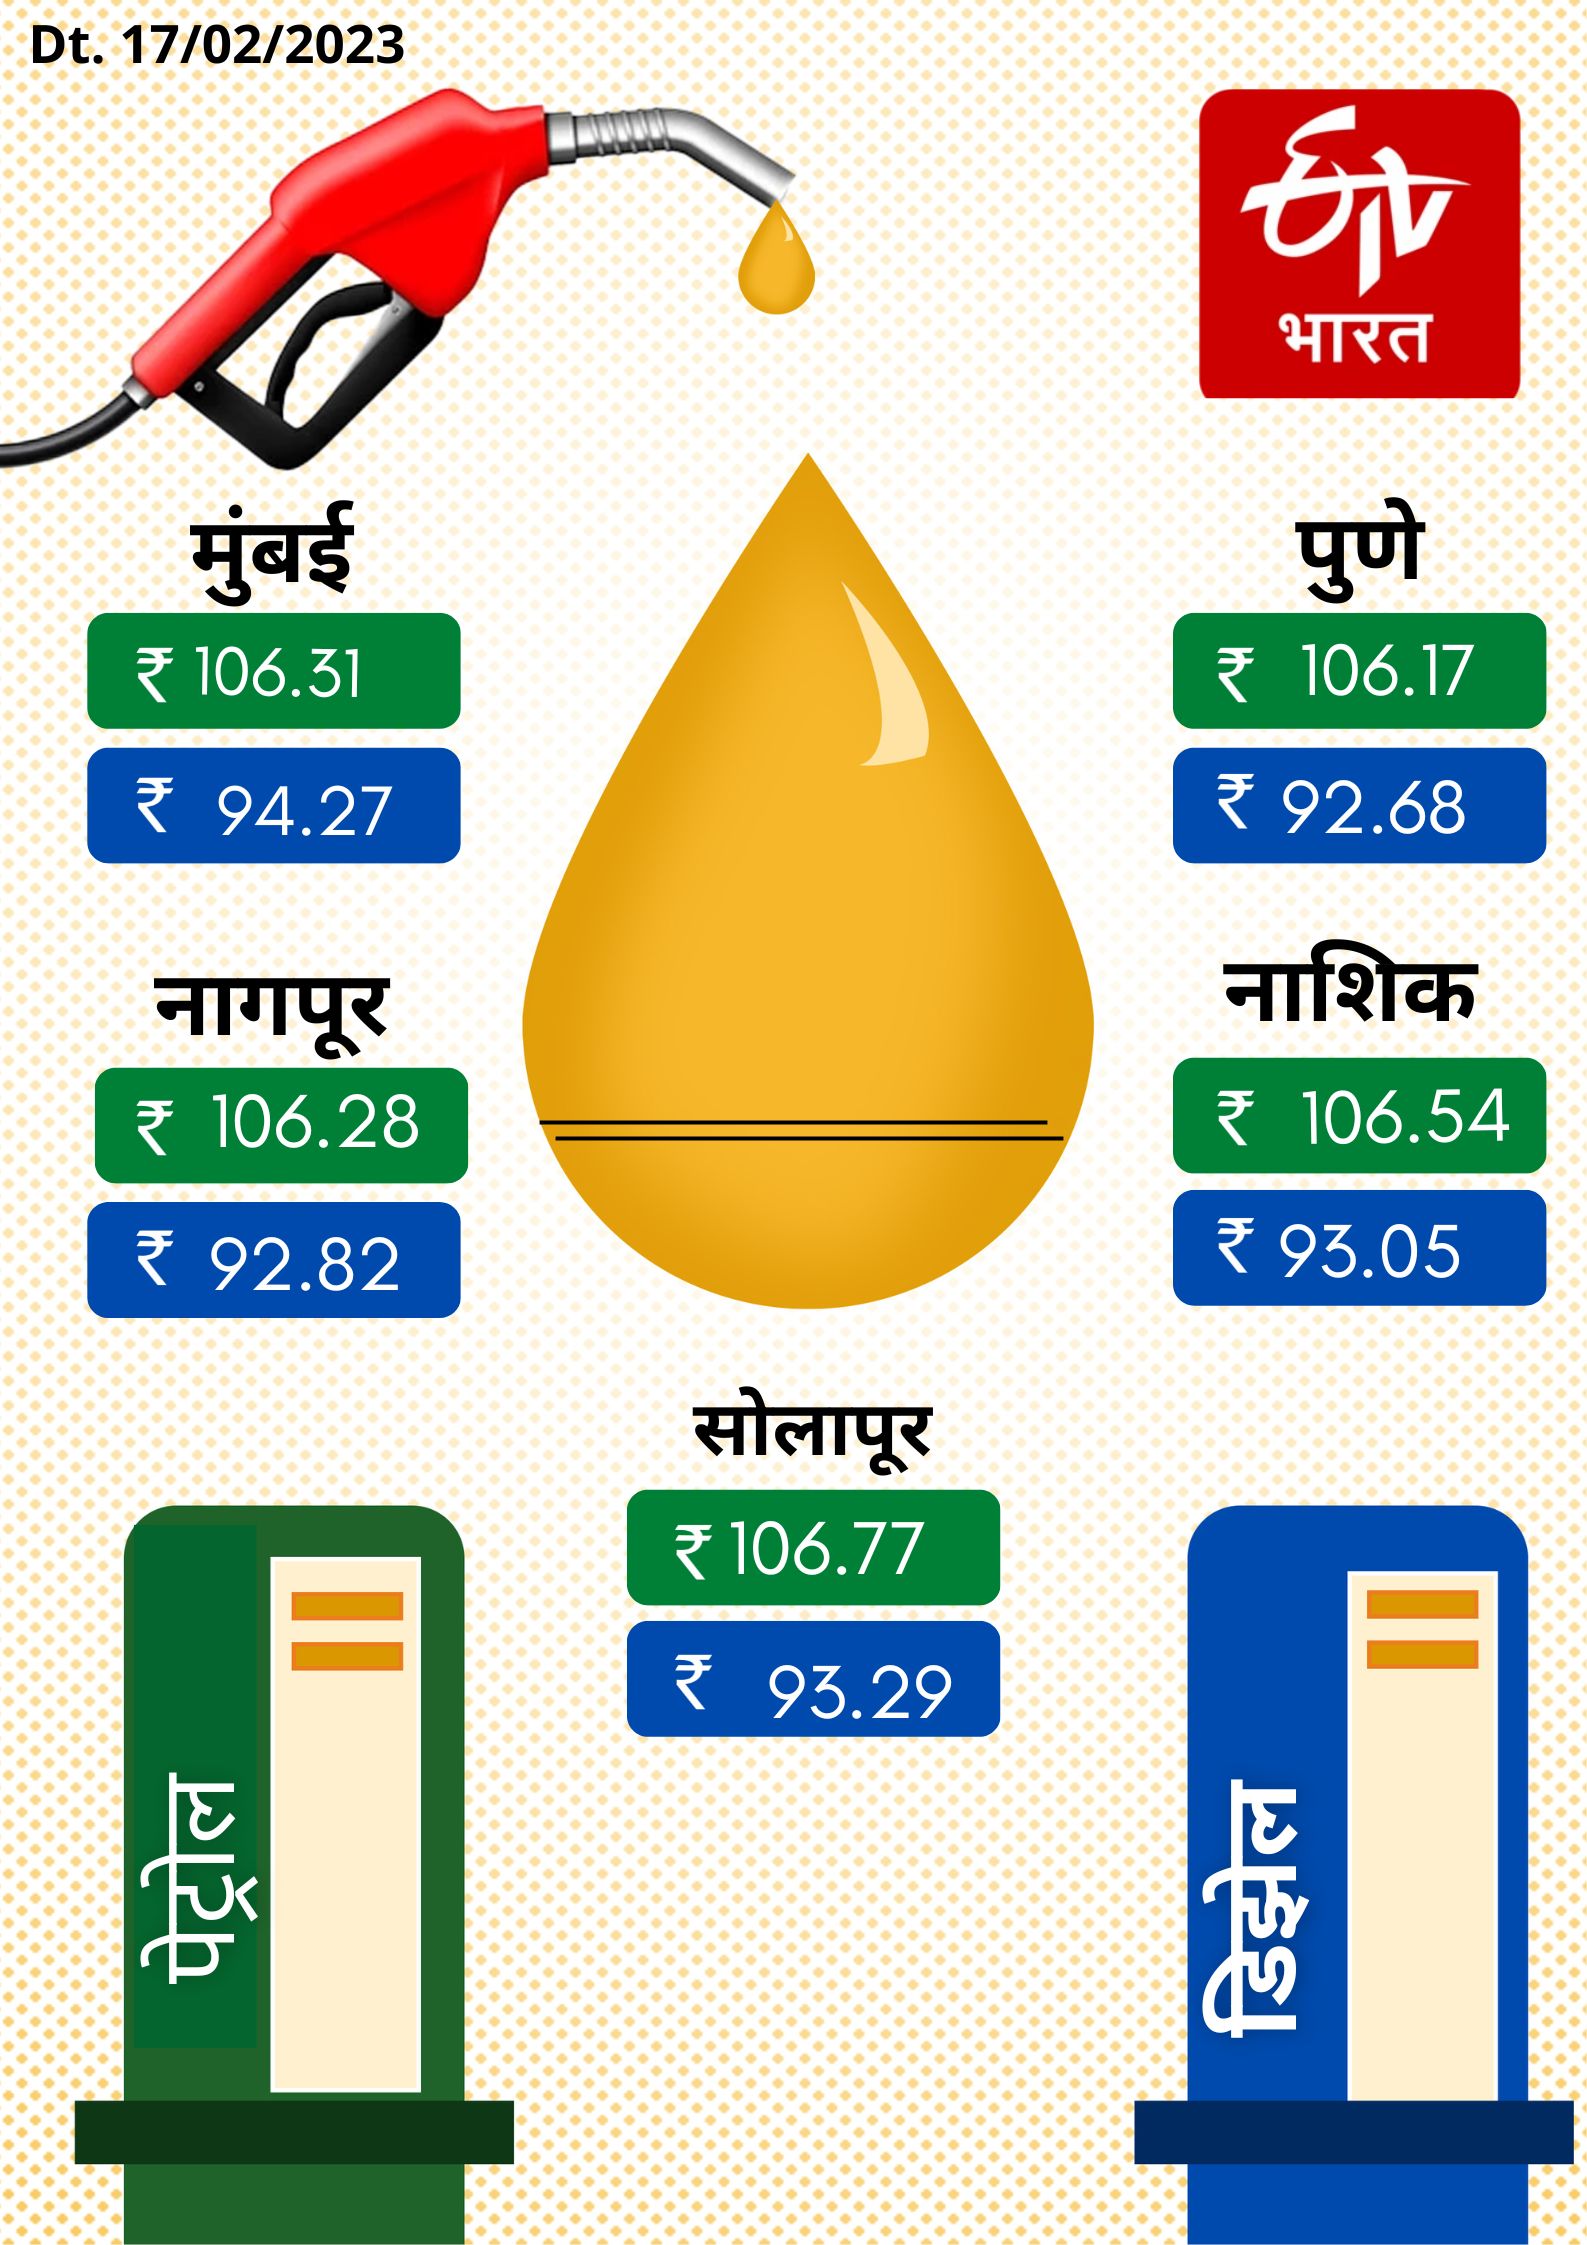 Petrol diesel rates in the city